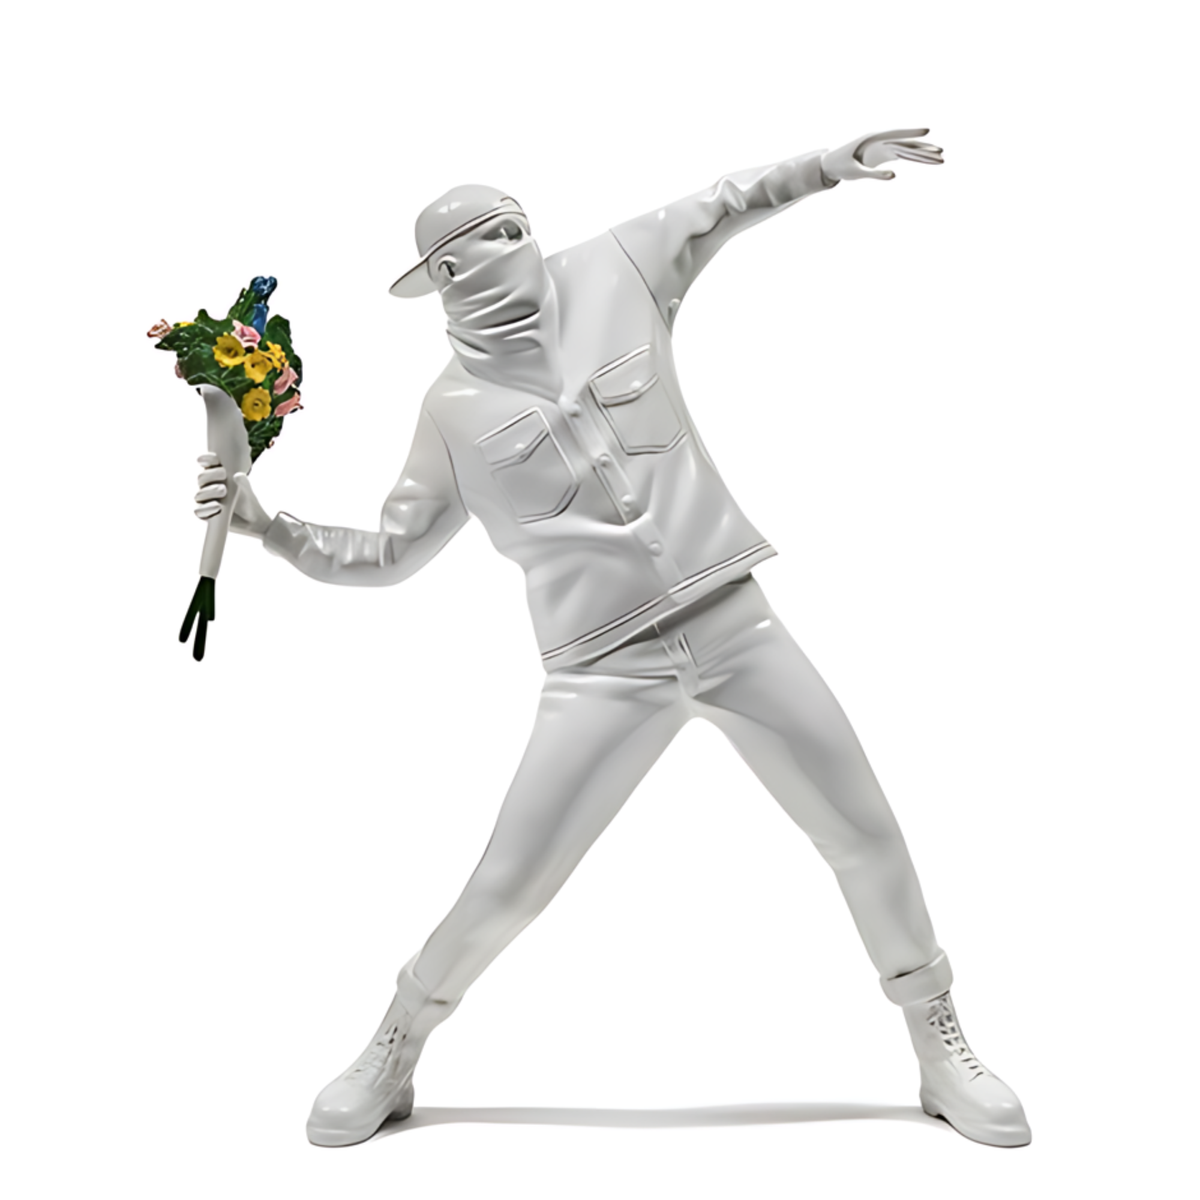 Flower Bomber Sculpture by Banksy